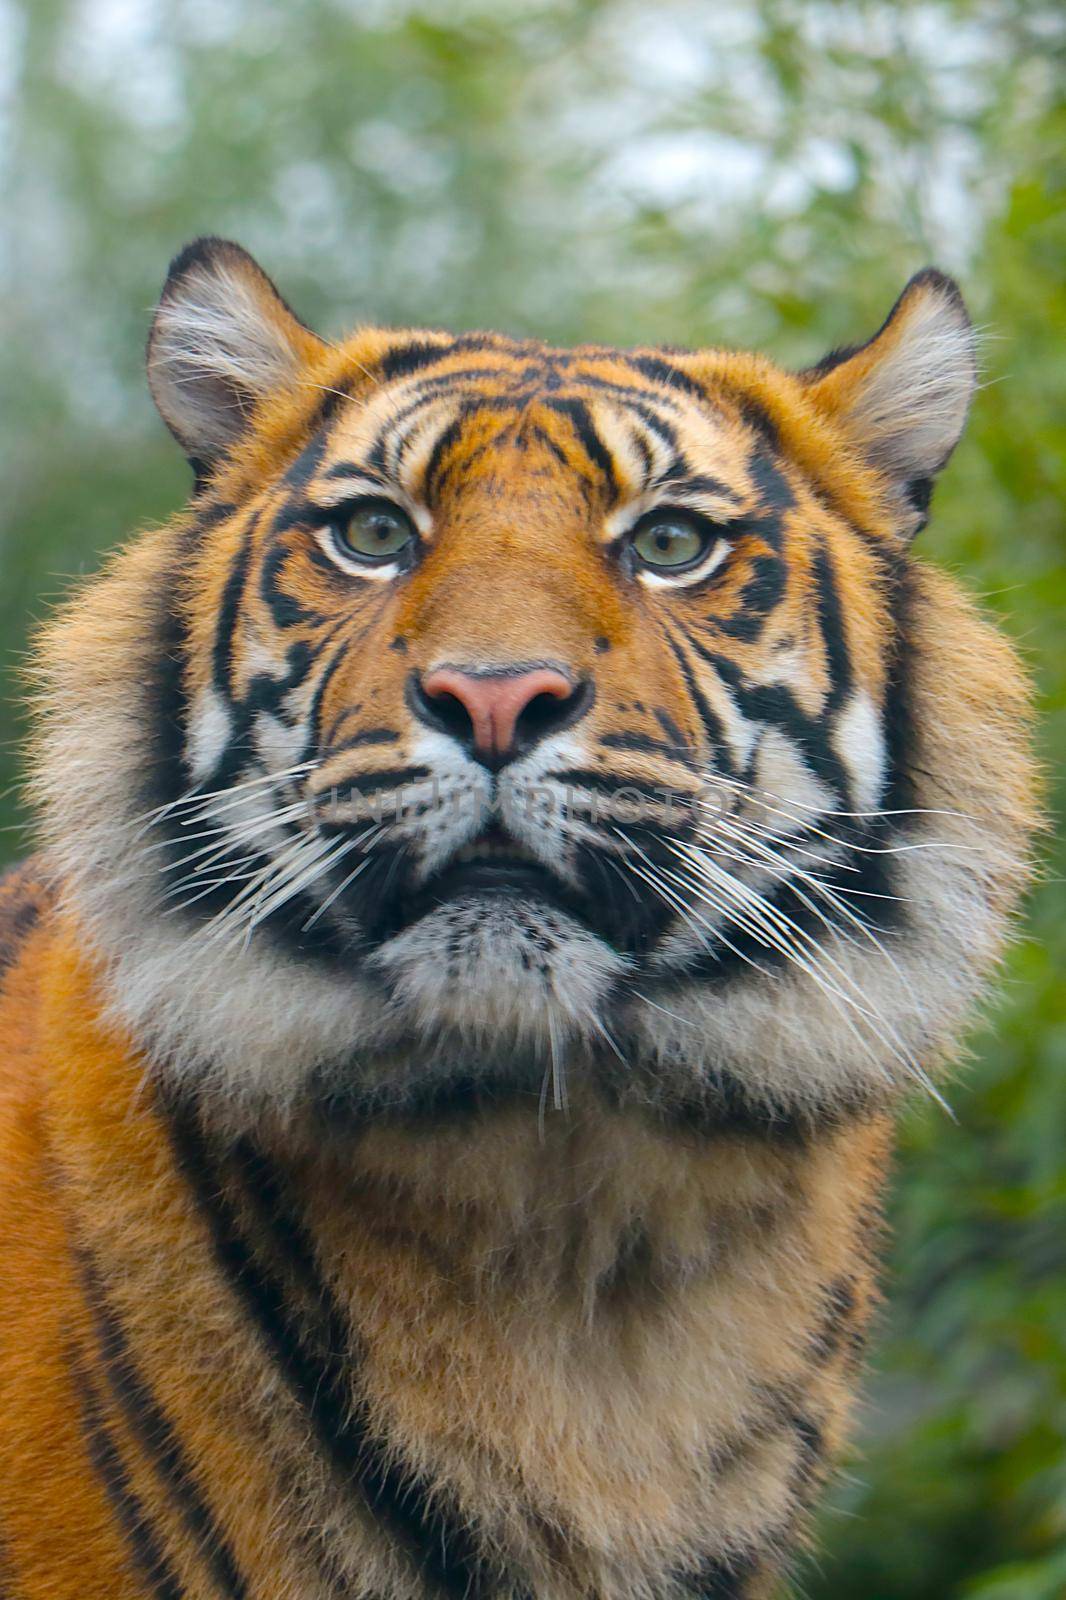 Portrait of a beautiful tiger in the wild. A predatory cat